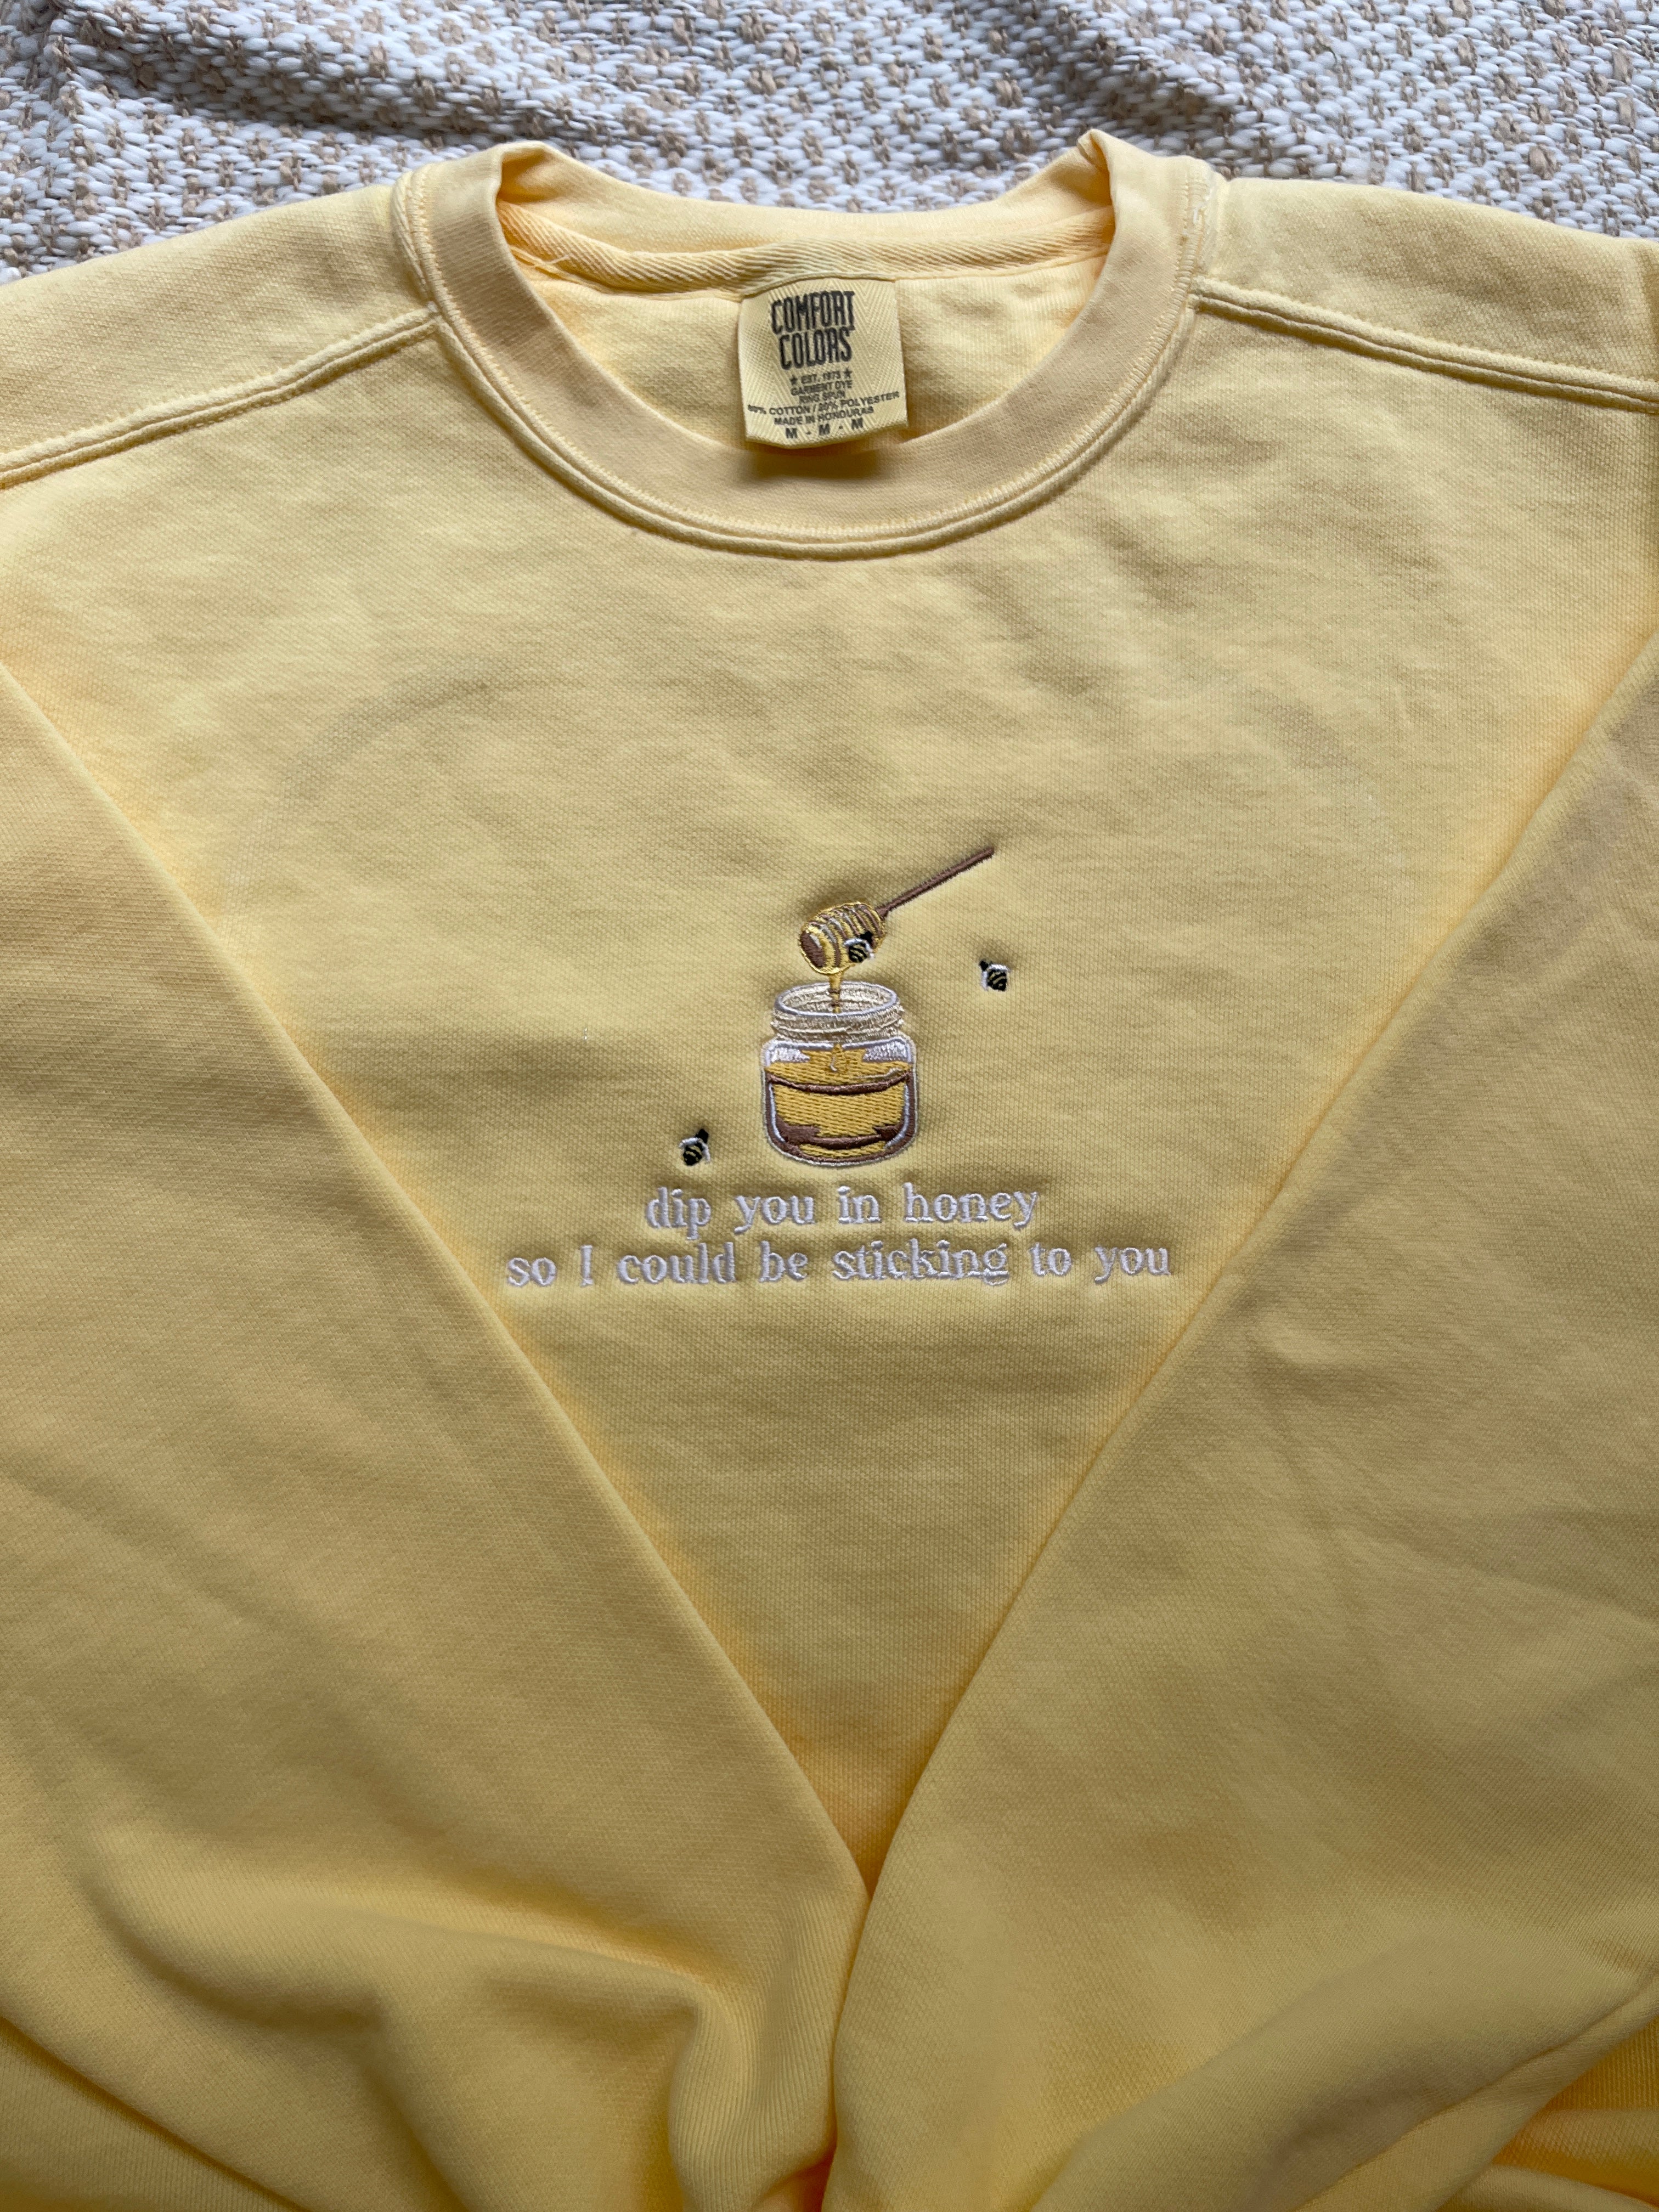 Dip You In Honey Embroidered Tee or Crewneck – splendidthreadsco